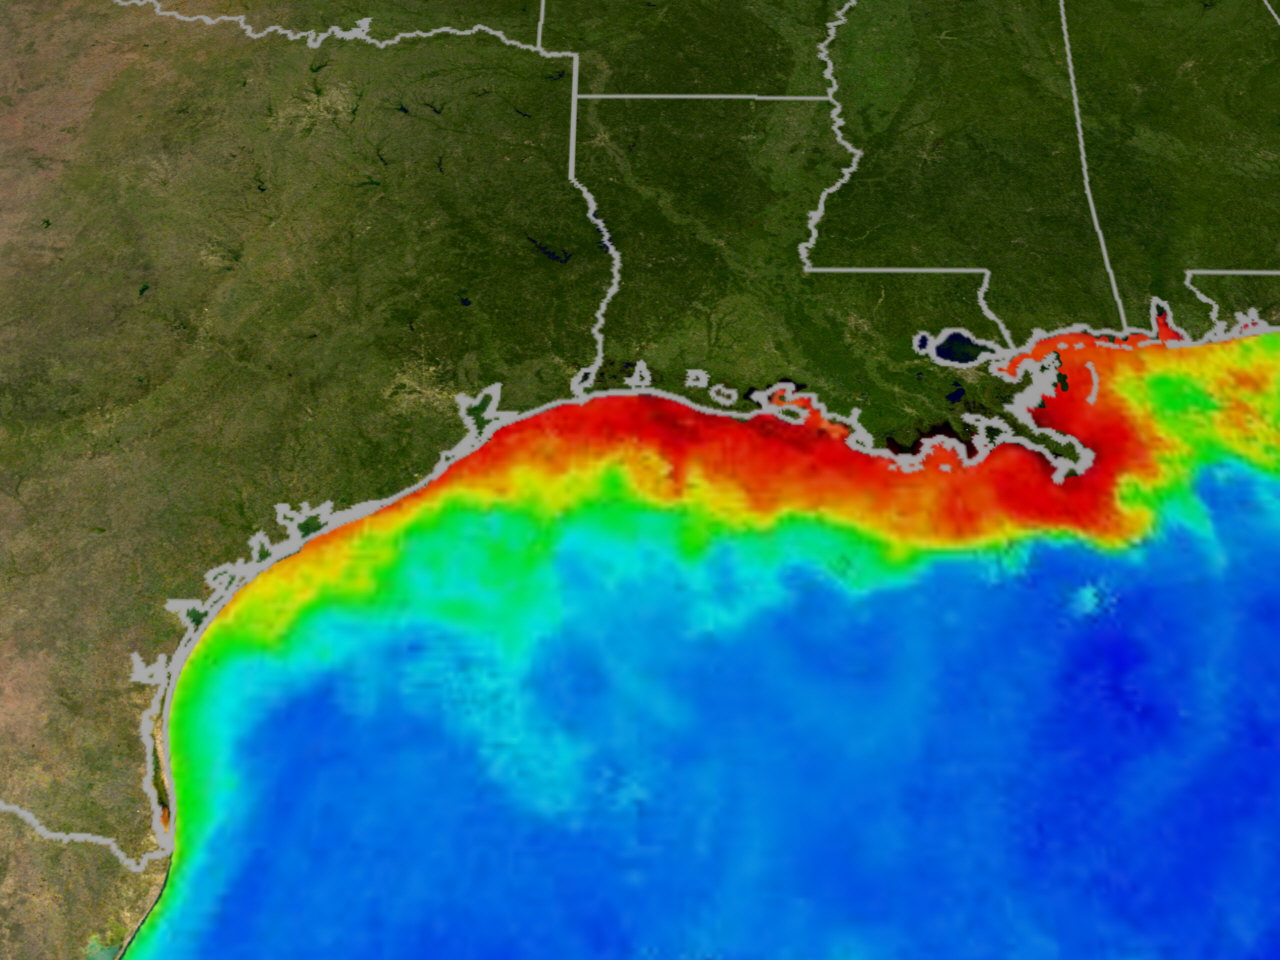 Image courtesy of the NASA Mississippi Dead Zone web site.